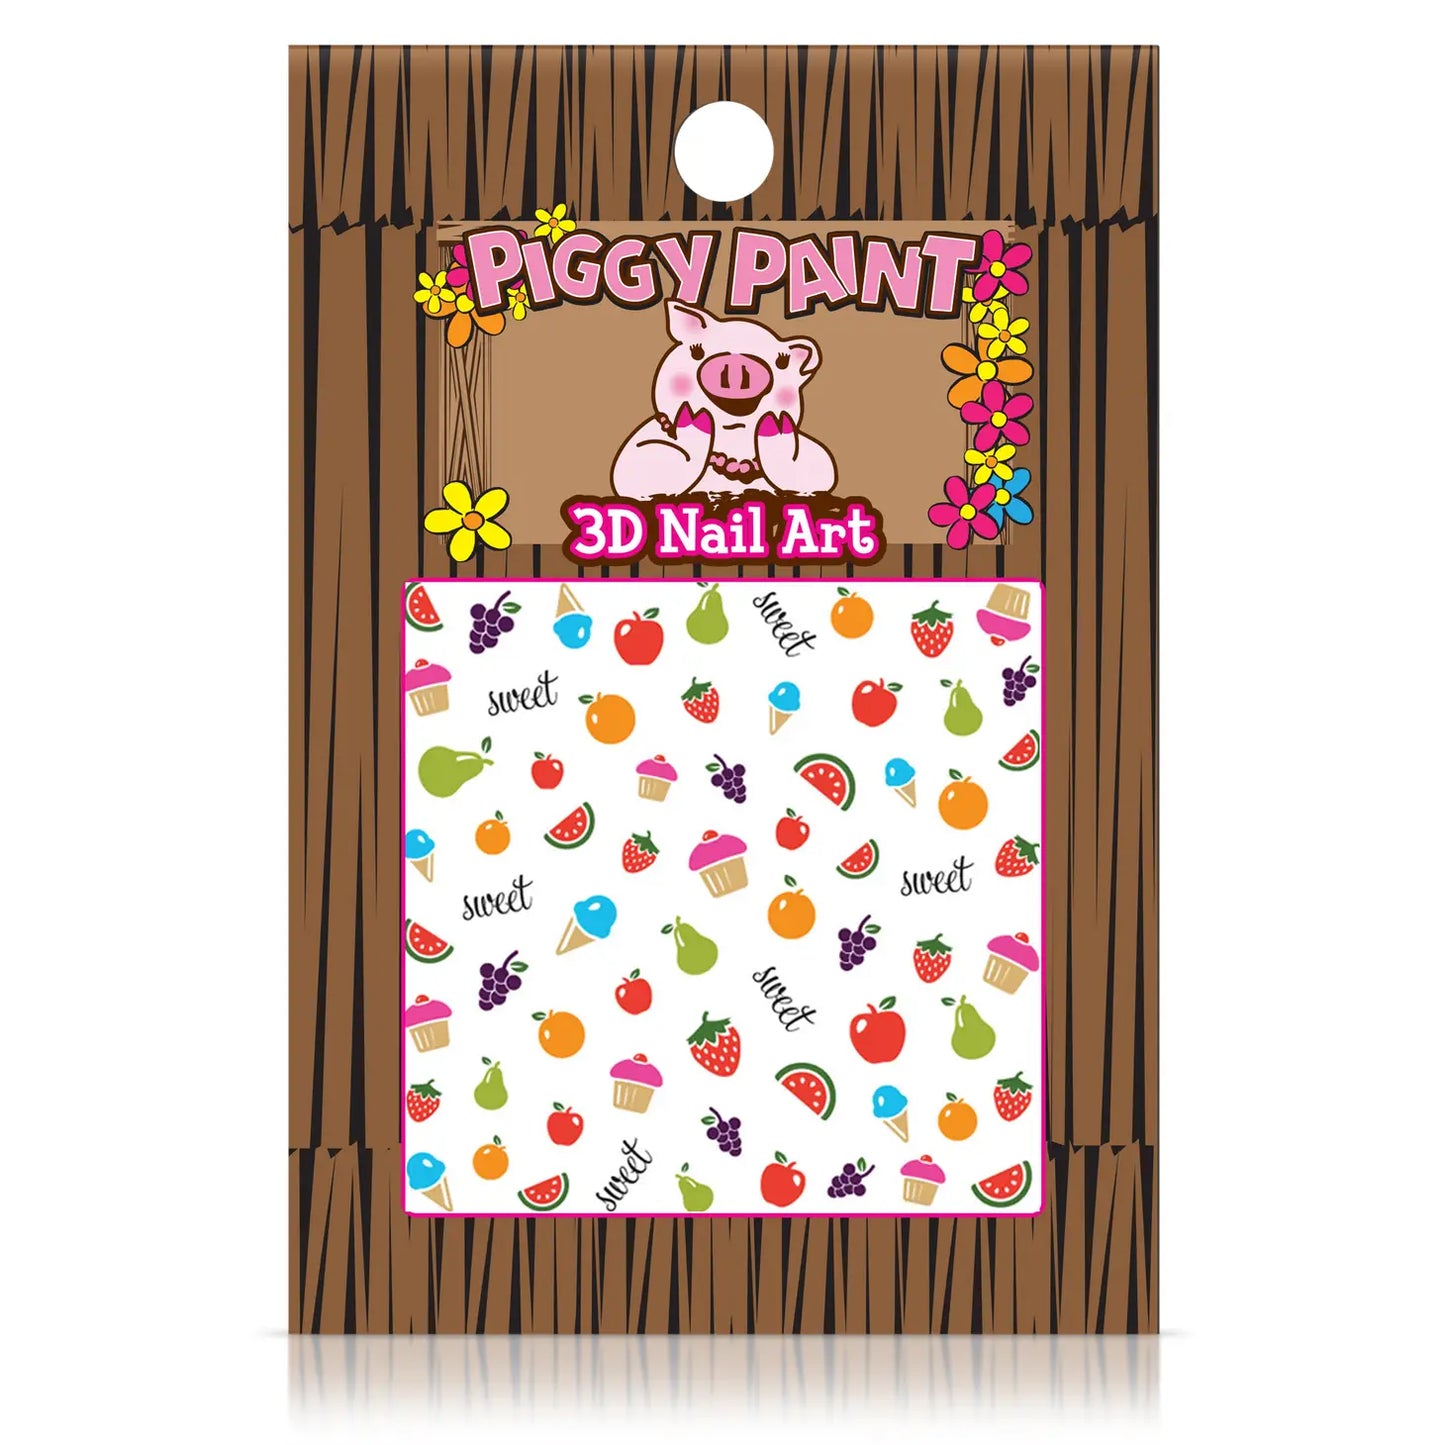 Piggy Paint Non-Toxic Nail Art Stickers for Kids - Multiple Prints